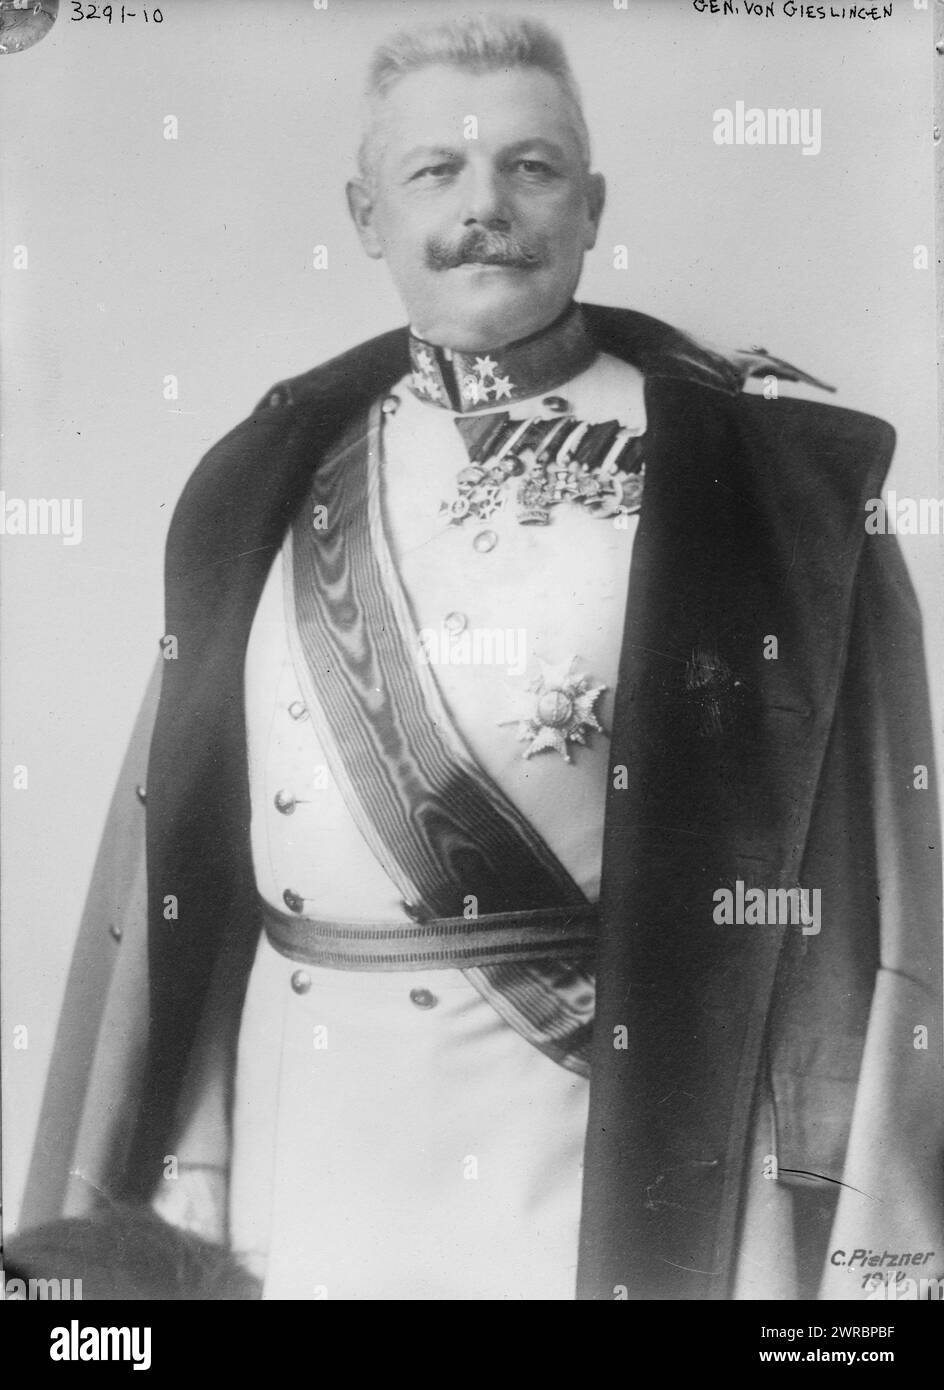 Gen. Von Gieslingen, la fotografia mostra Arthur Giesl Freiherr von Gieslingen (1857-1935), un generale austriaco e direttore del servizio di intelligence militare., 1914, Glass negative, 1 negative: Glass Foto Stock